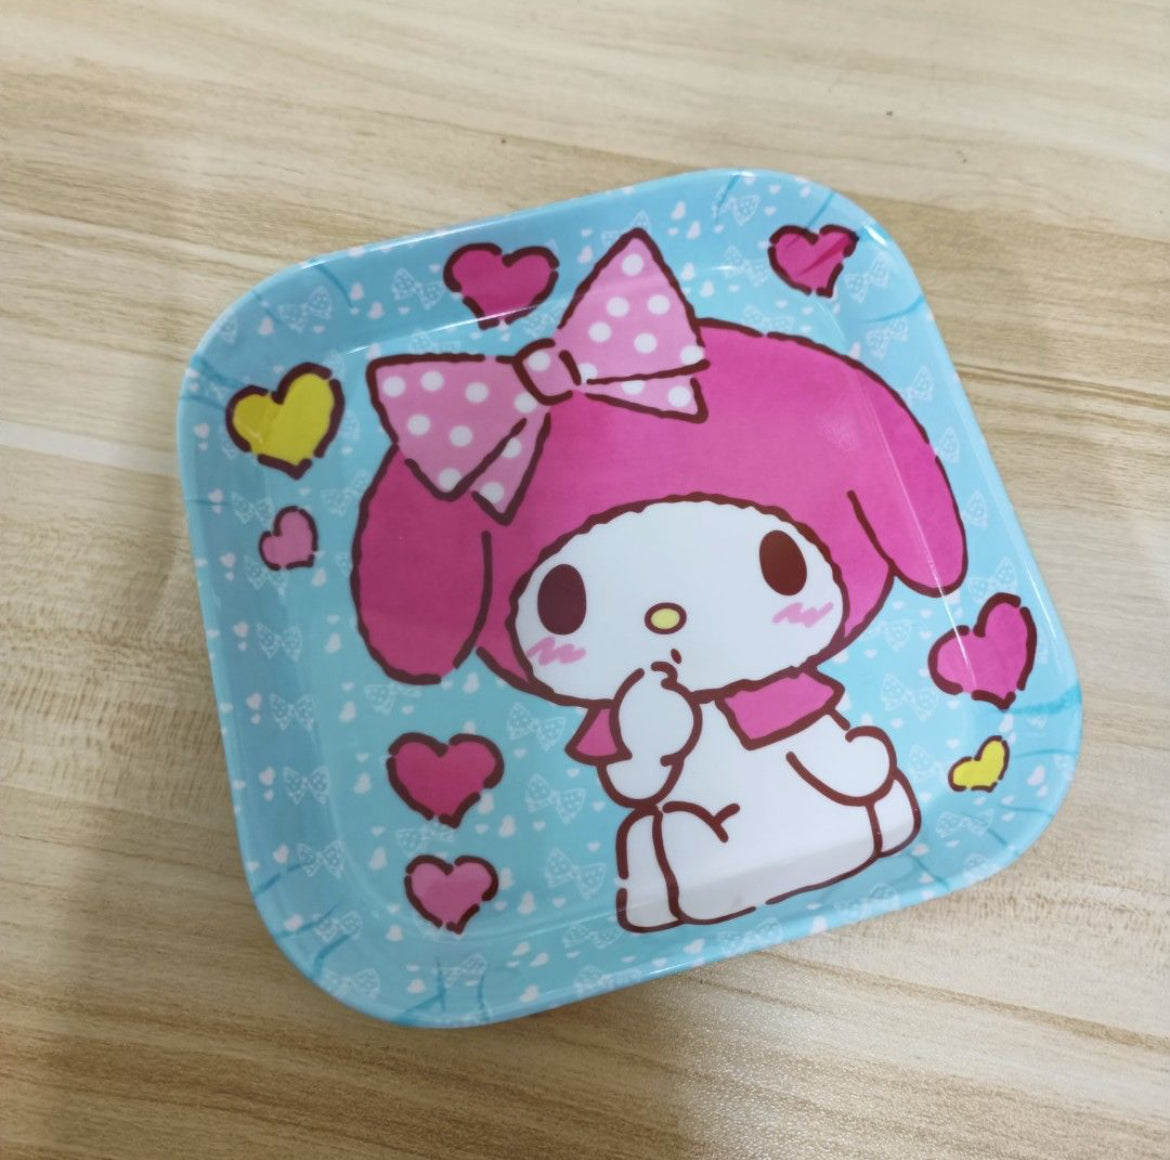 Sanrio Cute Mini Melamine Plate